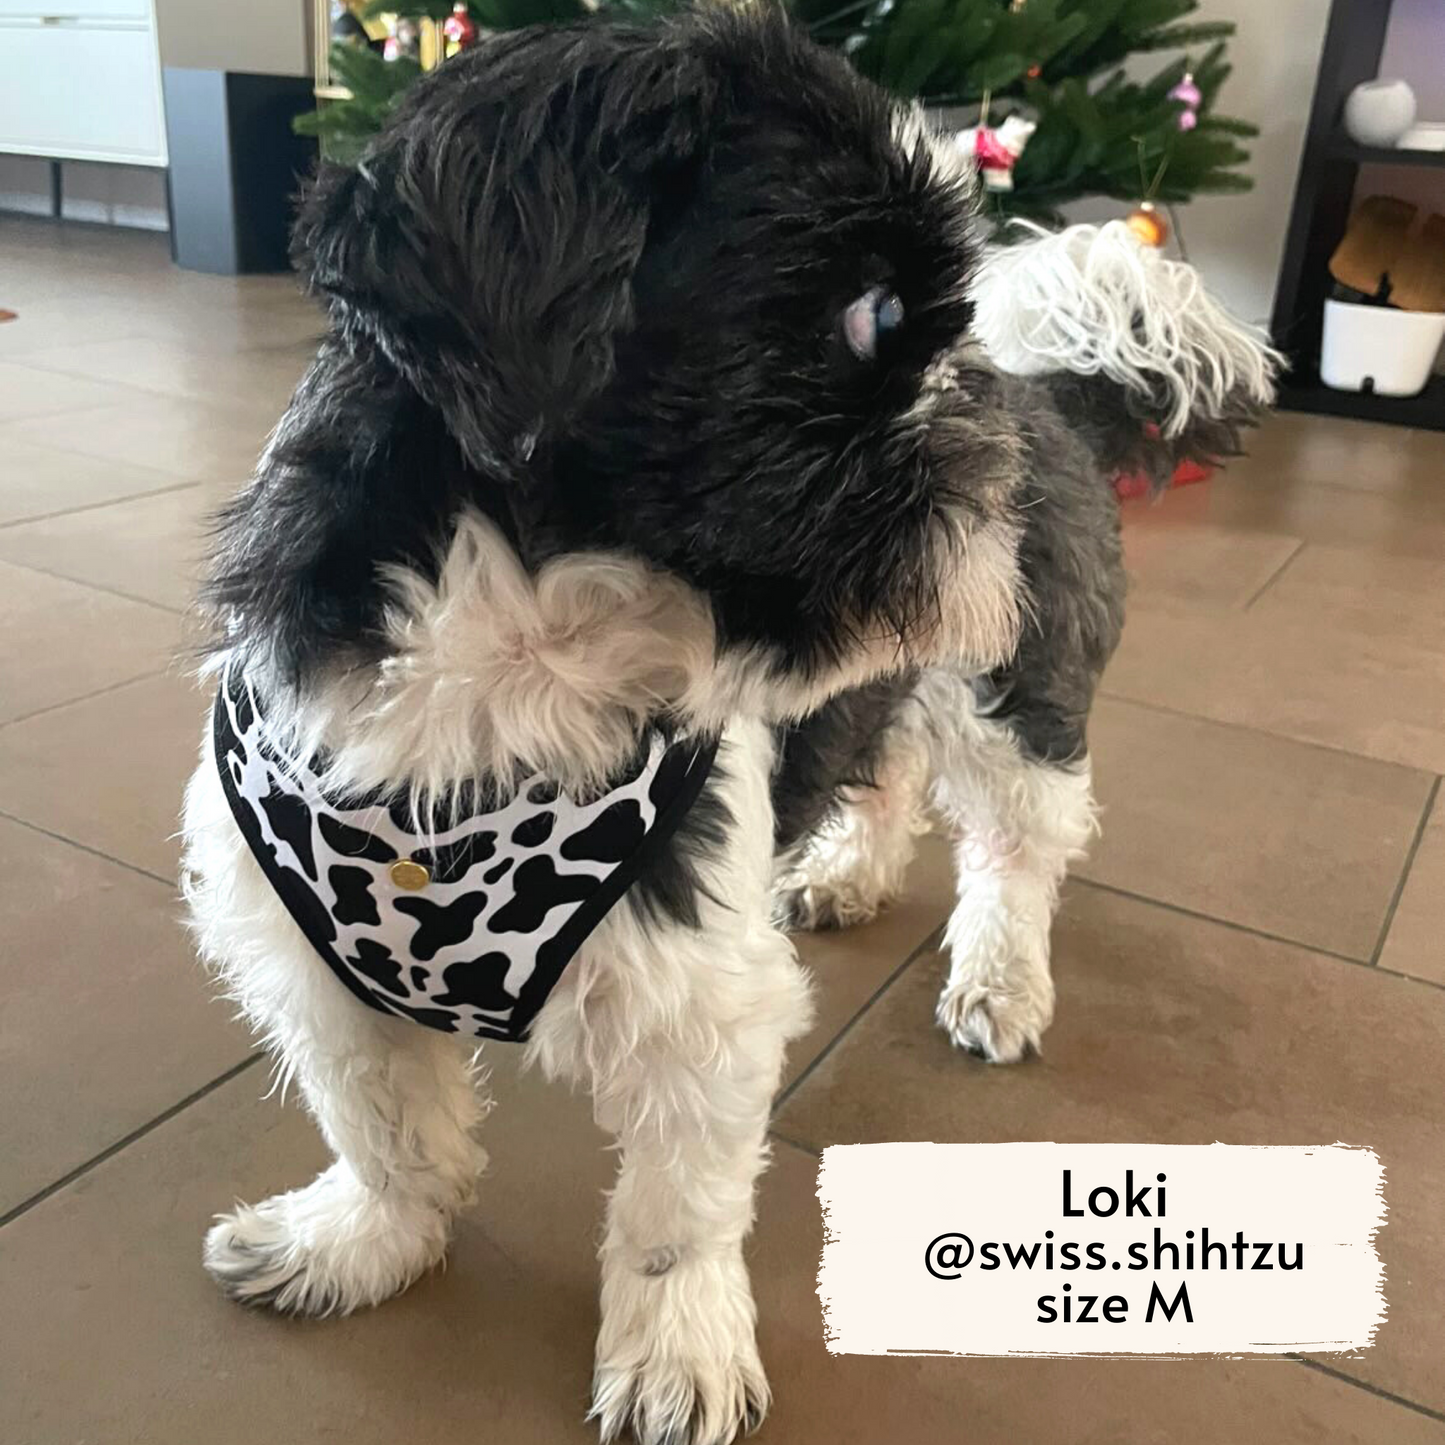 Pata Paw moo harness as seen on a medium sized dog, Loki